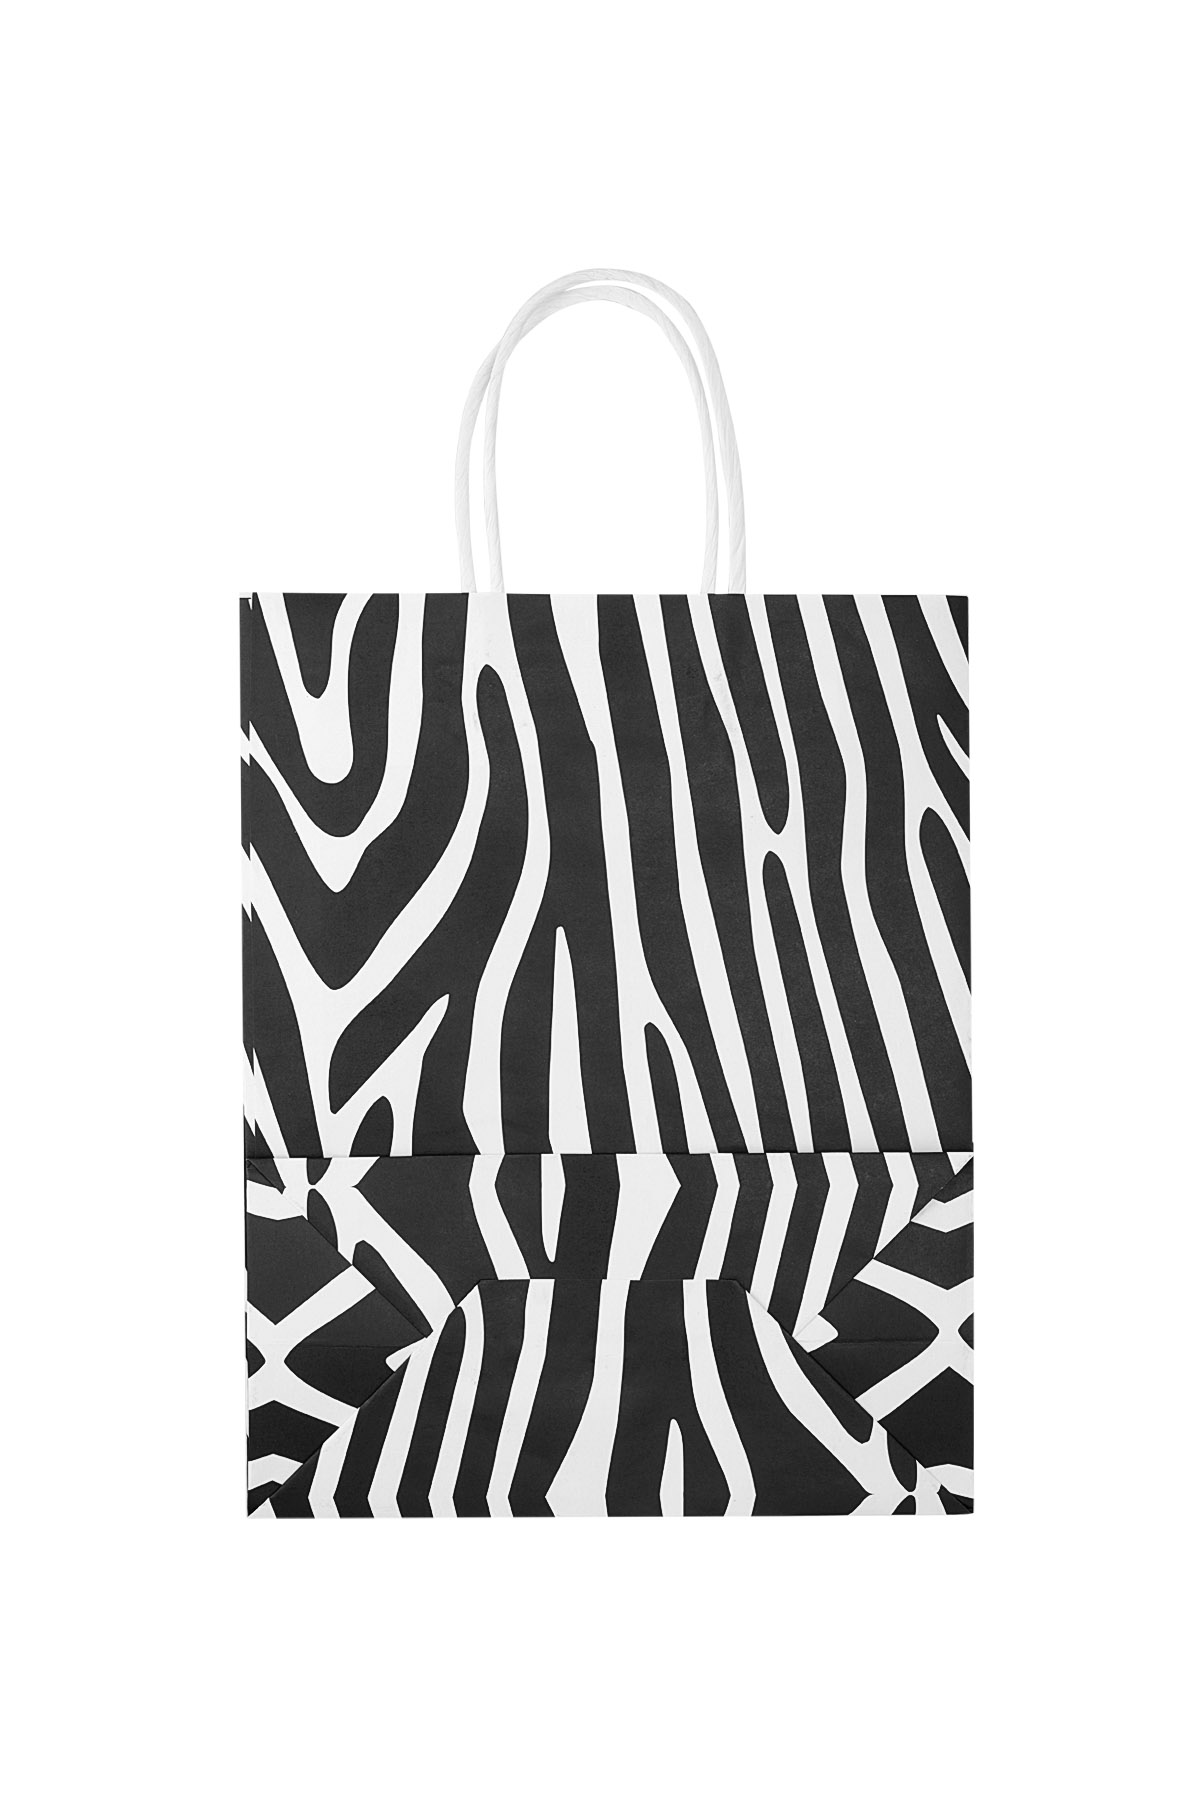 Bags zebra 50 pieces - black/white Paper h5 Picture2